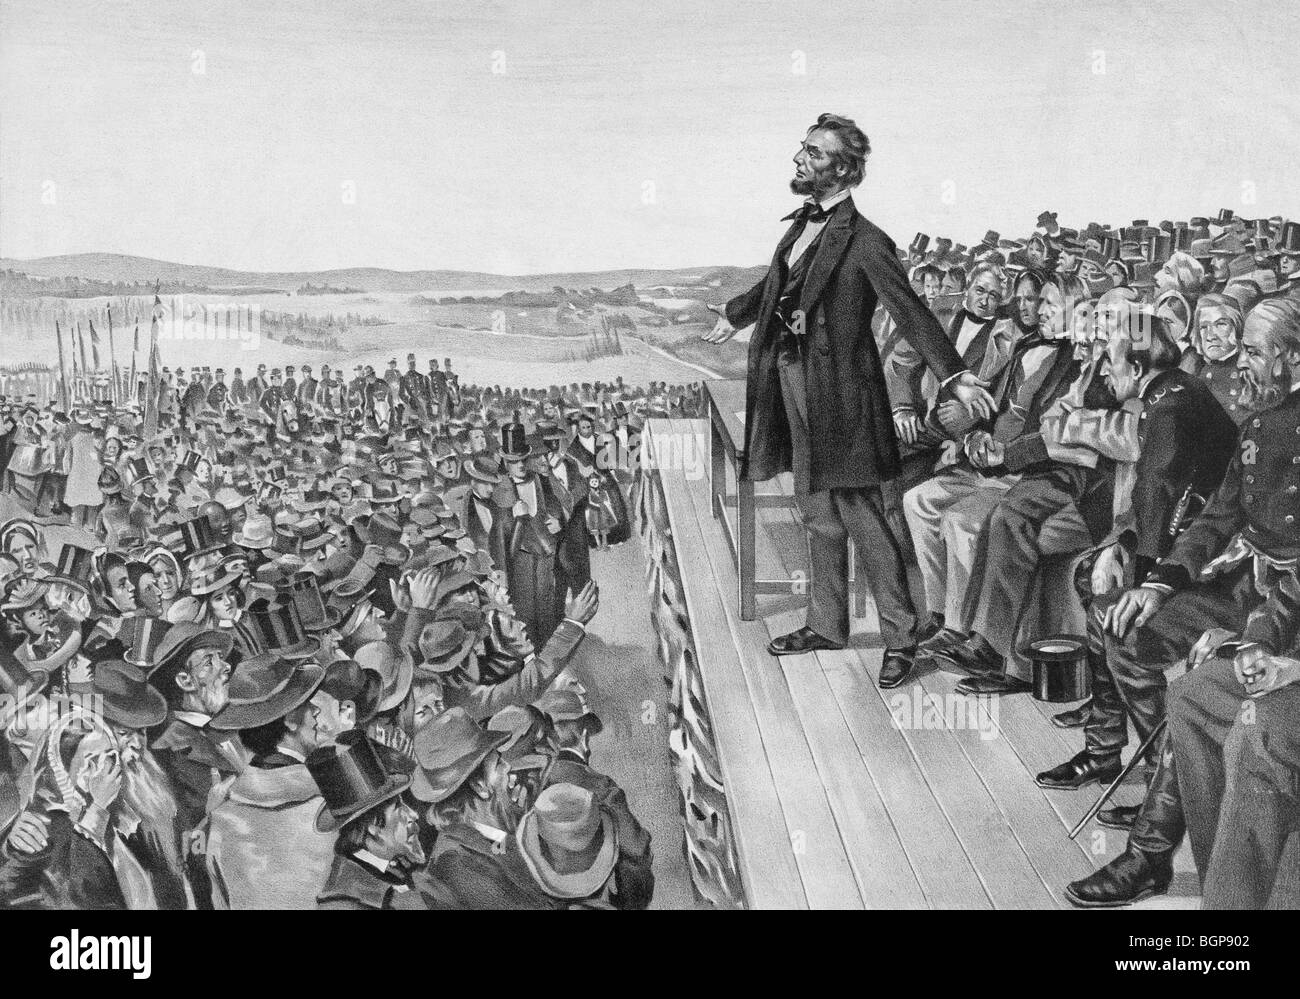 Print c1905 of US President Abraham Lincoln giving the famous Gettysburg Address on November 19 1863. Stock Photo